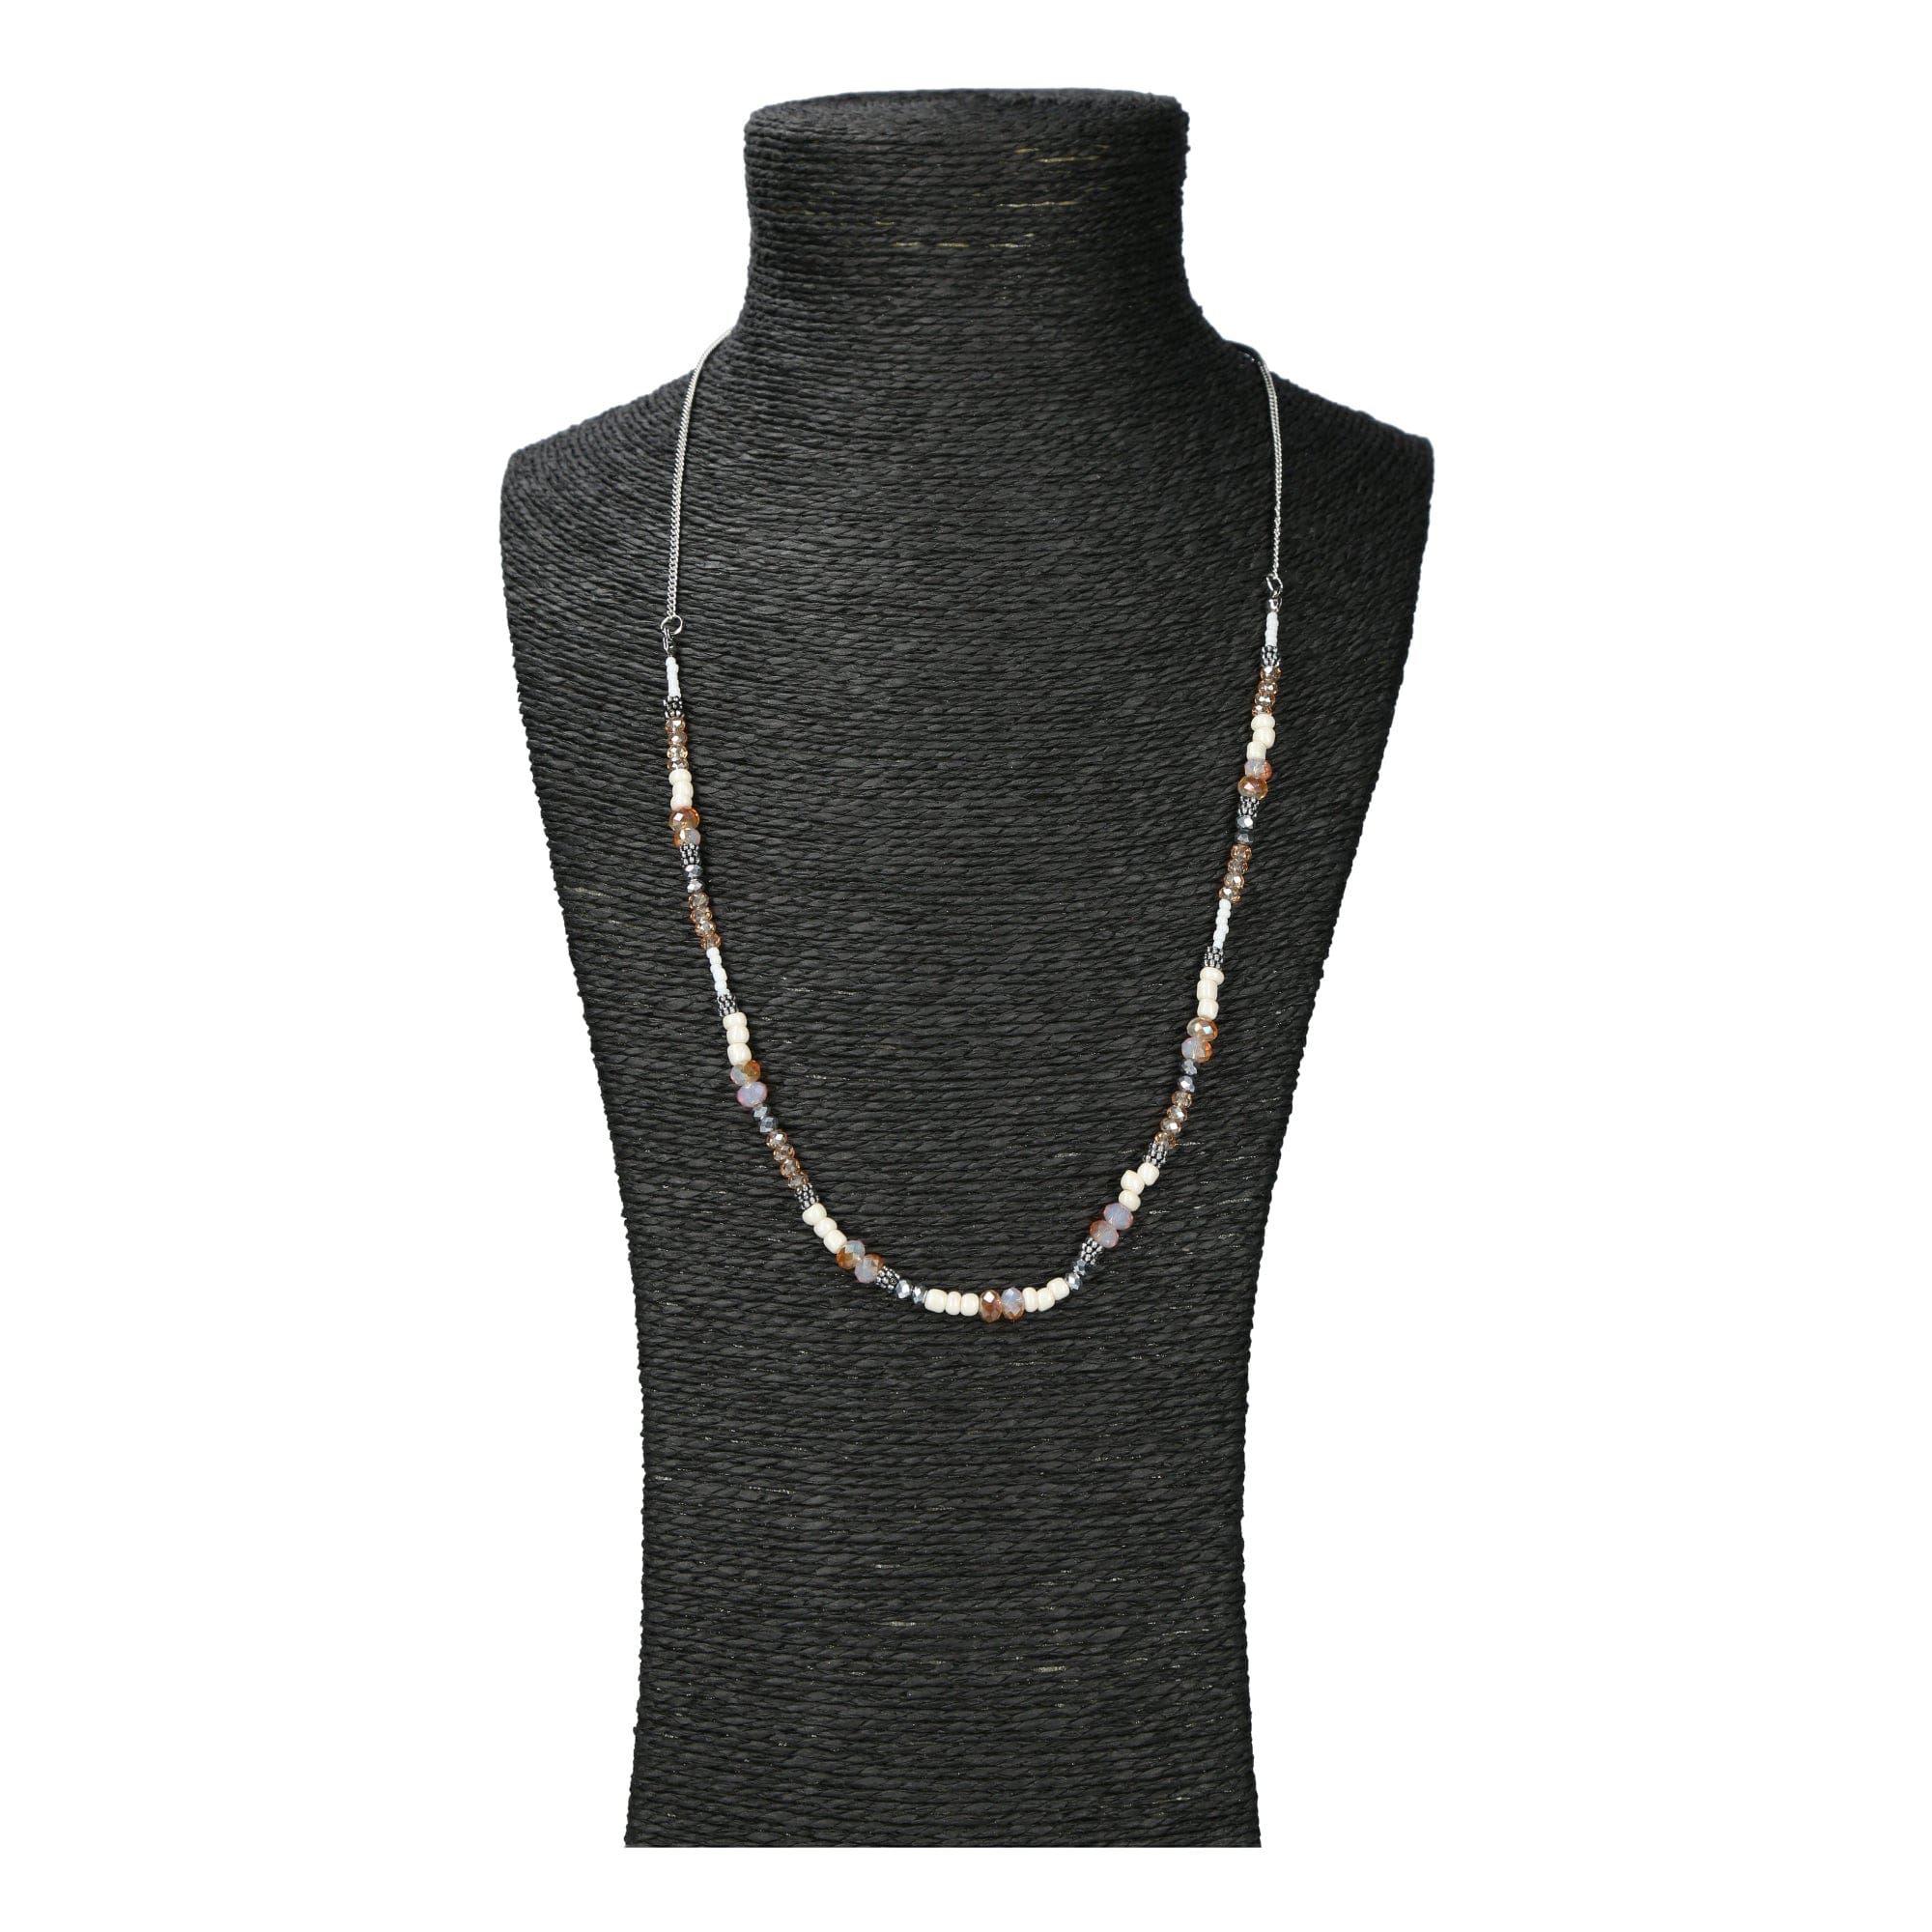 Jewel necklace Clutoida - Beige - Necklace